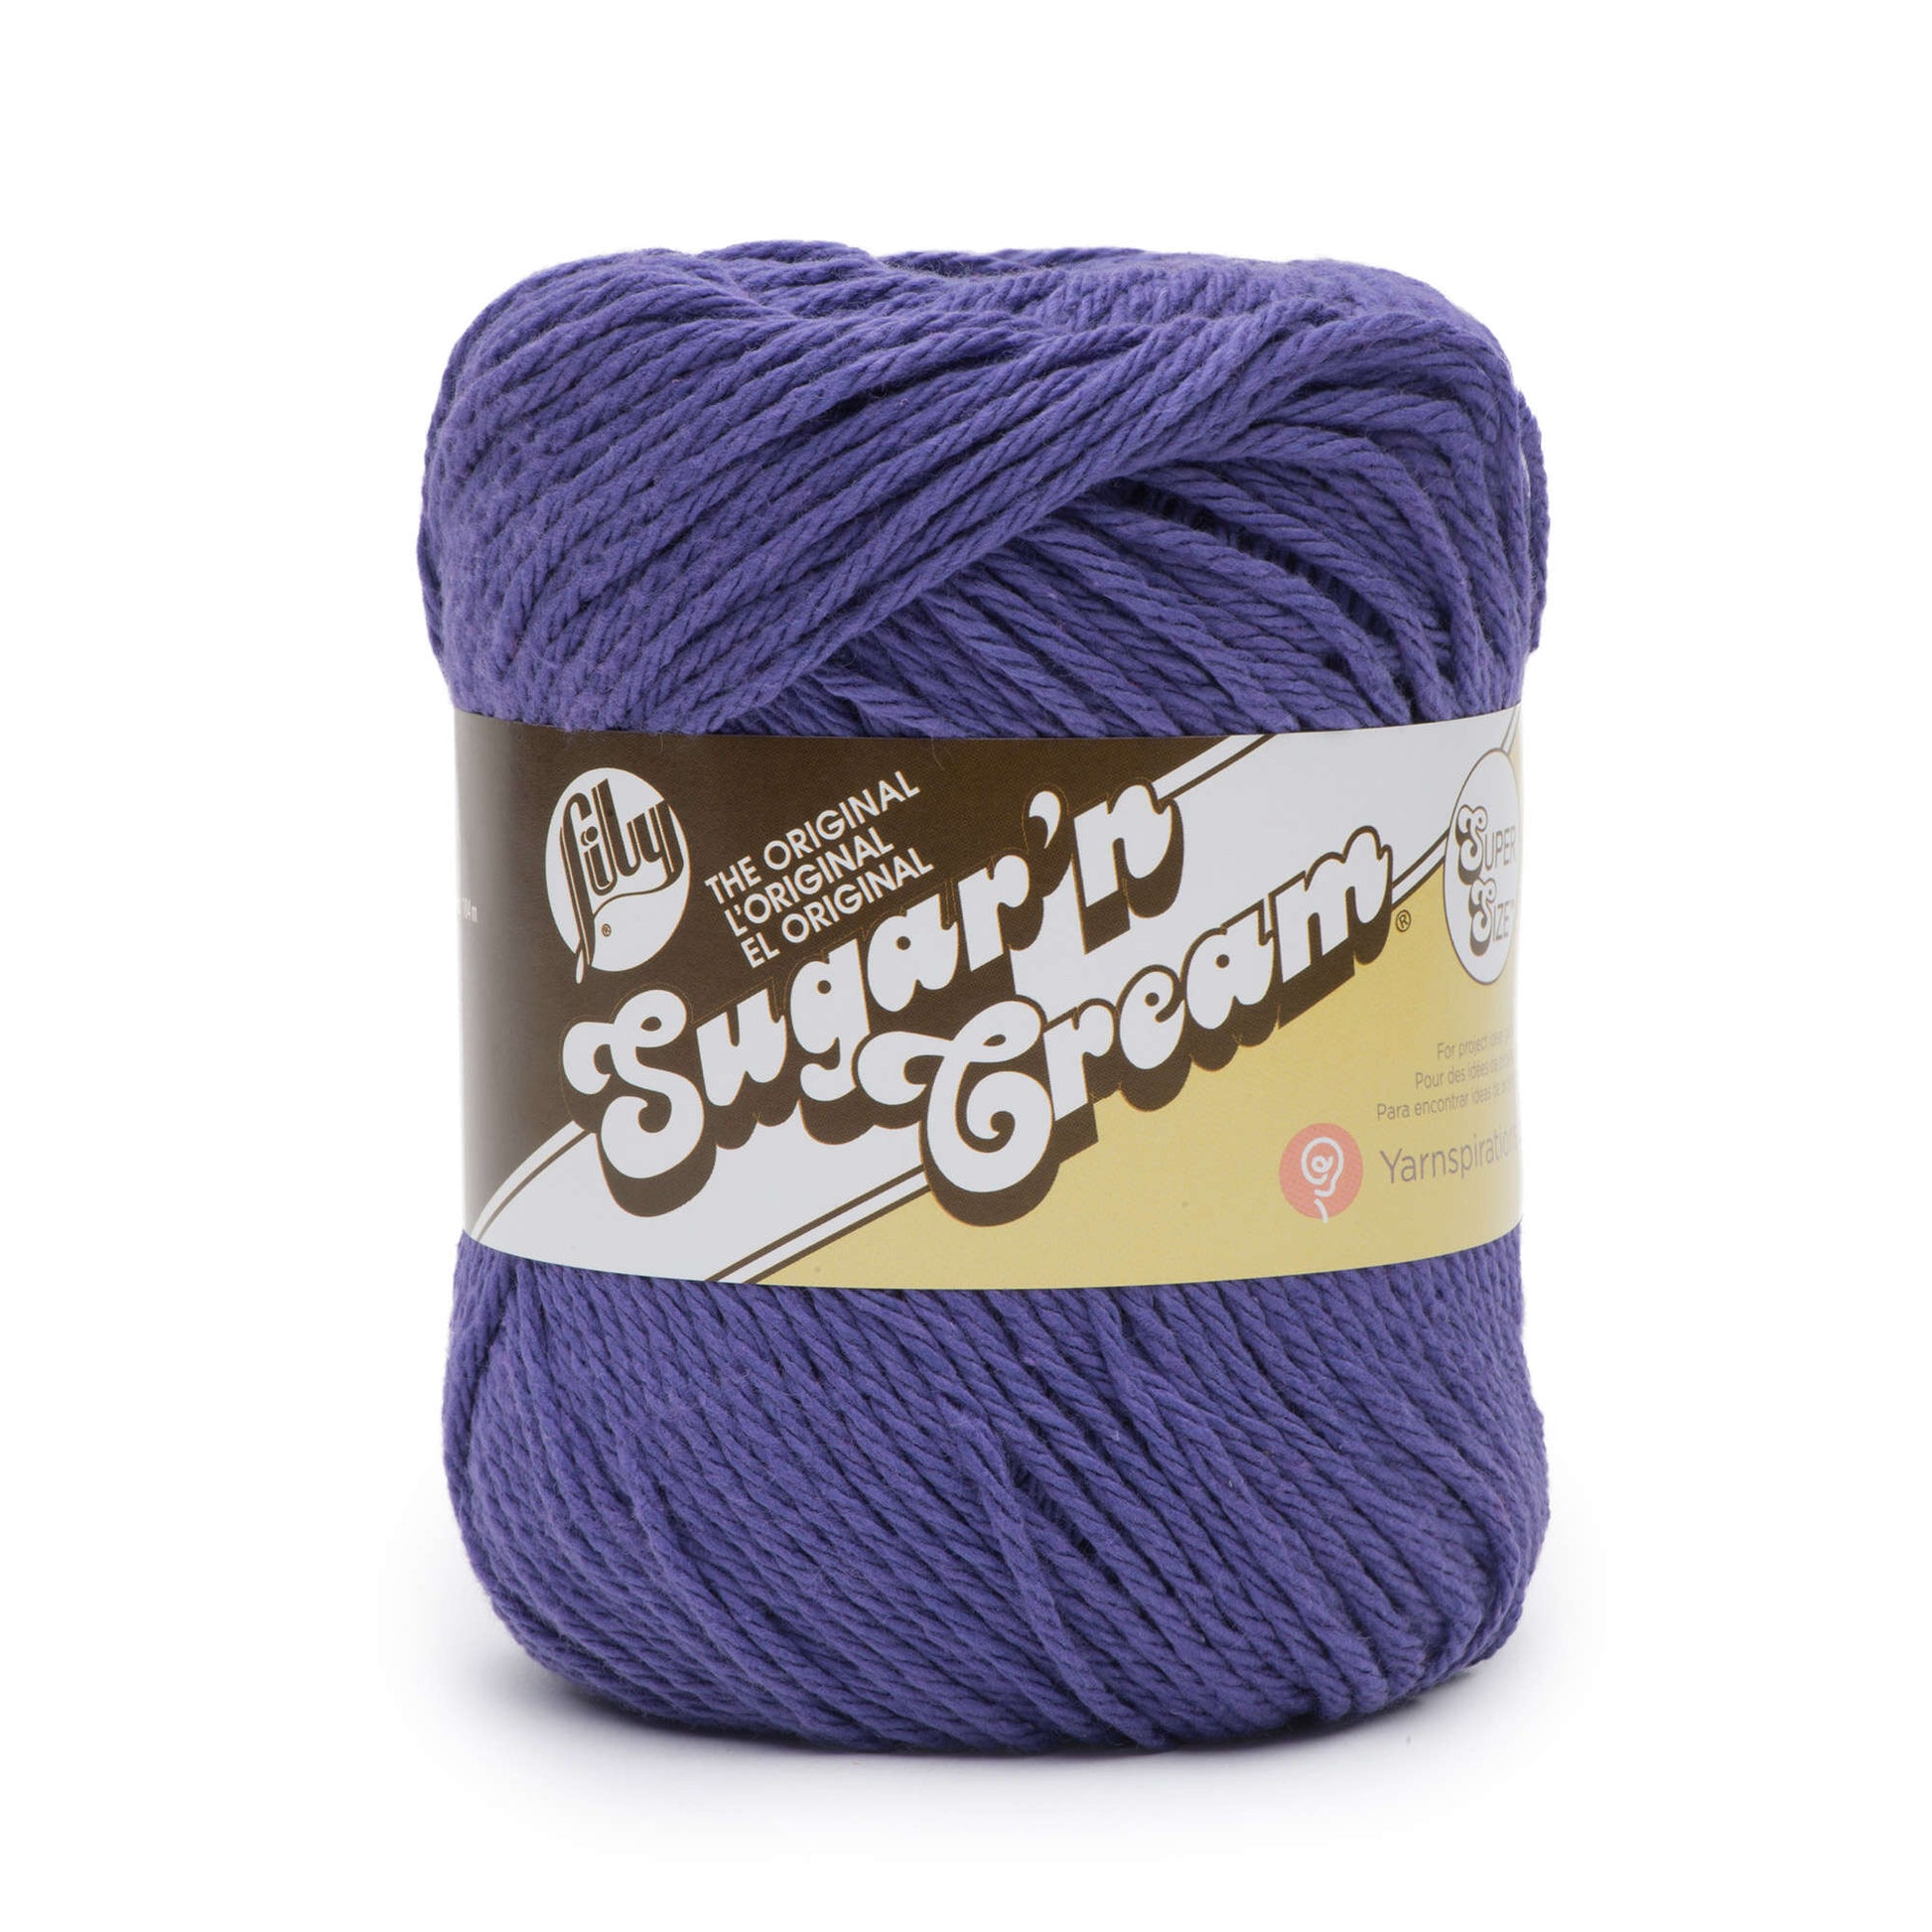 Lily Sugar 'n Cream Yarn Bundle 100% Cotton Worsted #4 Weight